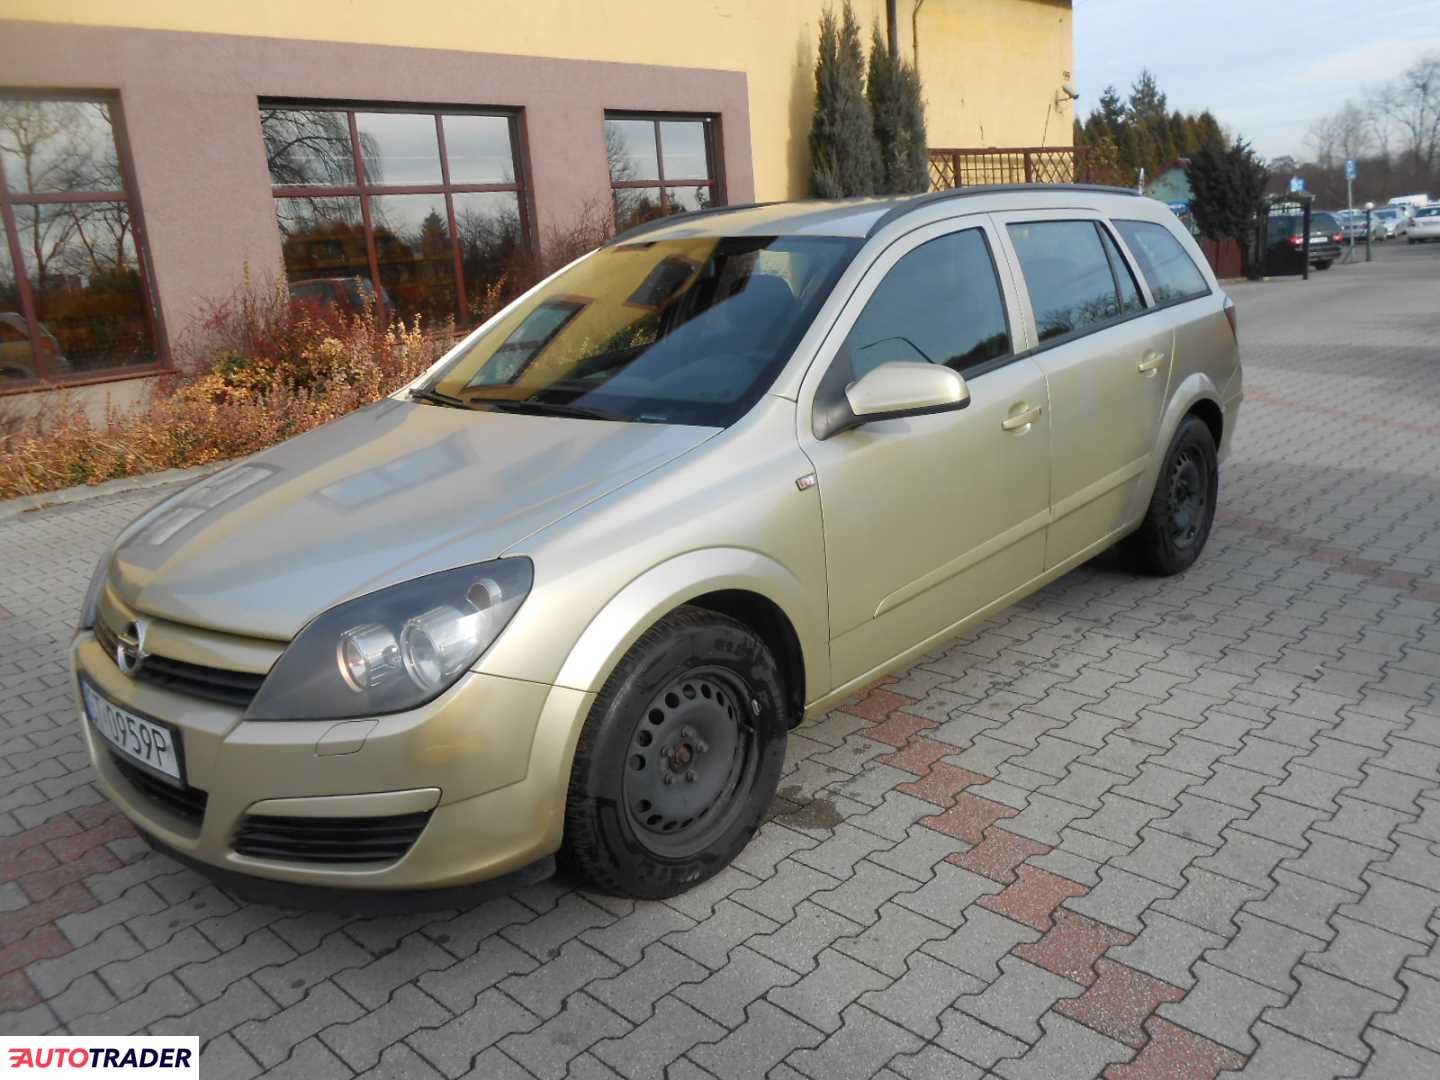 Opel Astra 2005 1.7 100 KM